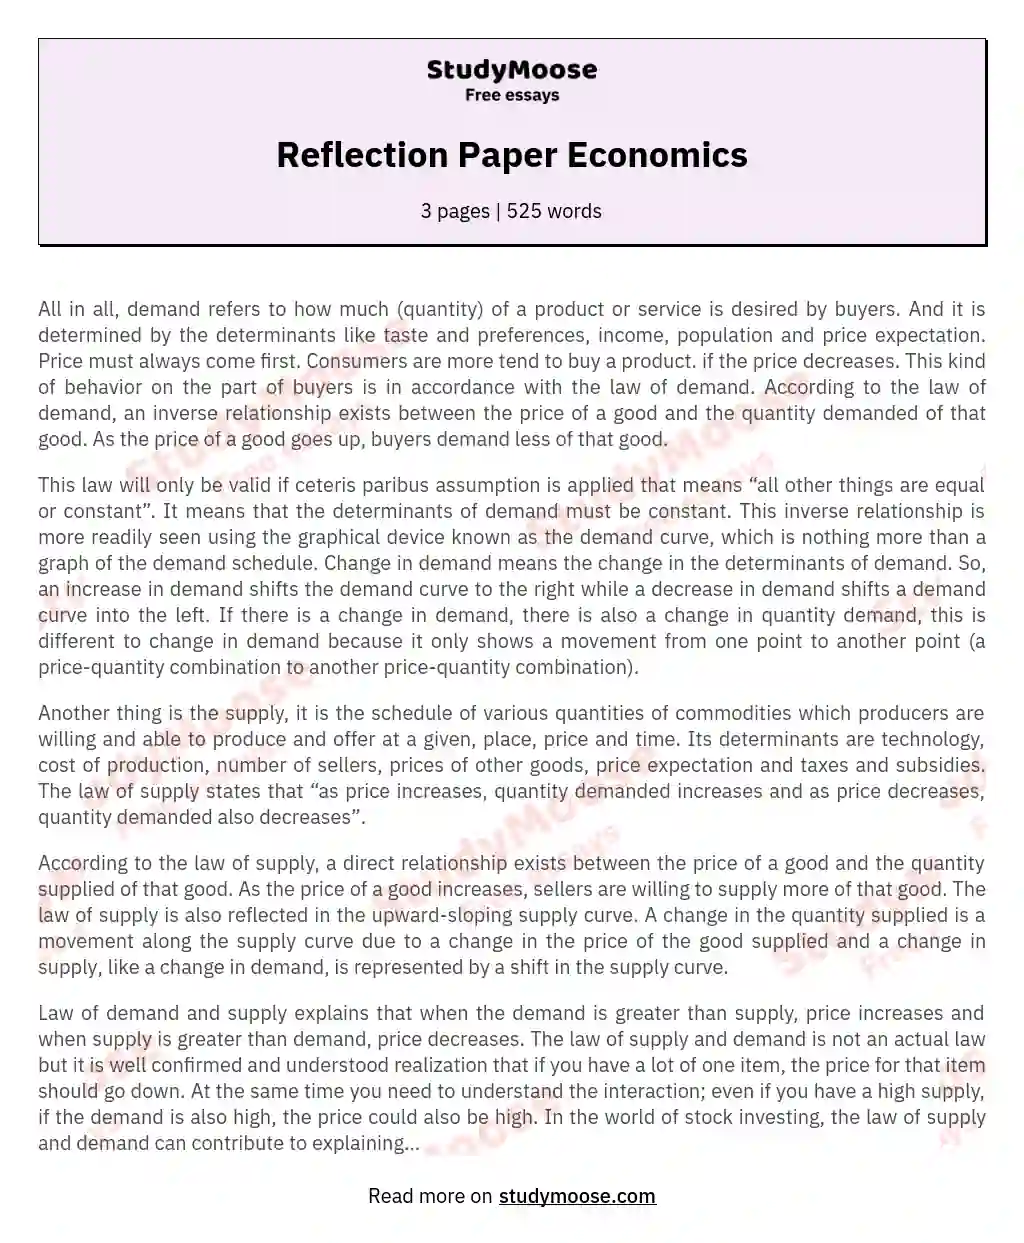 Reflection Paper Economics essay